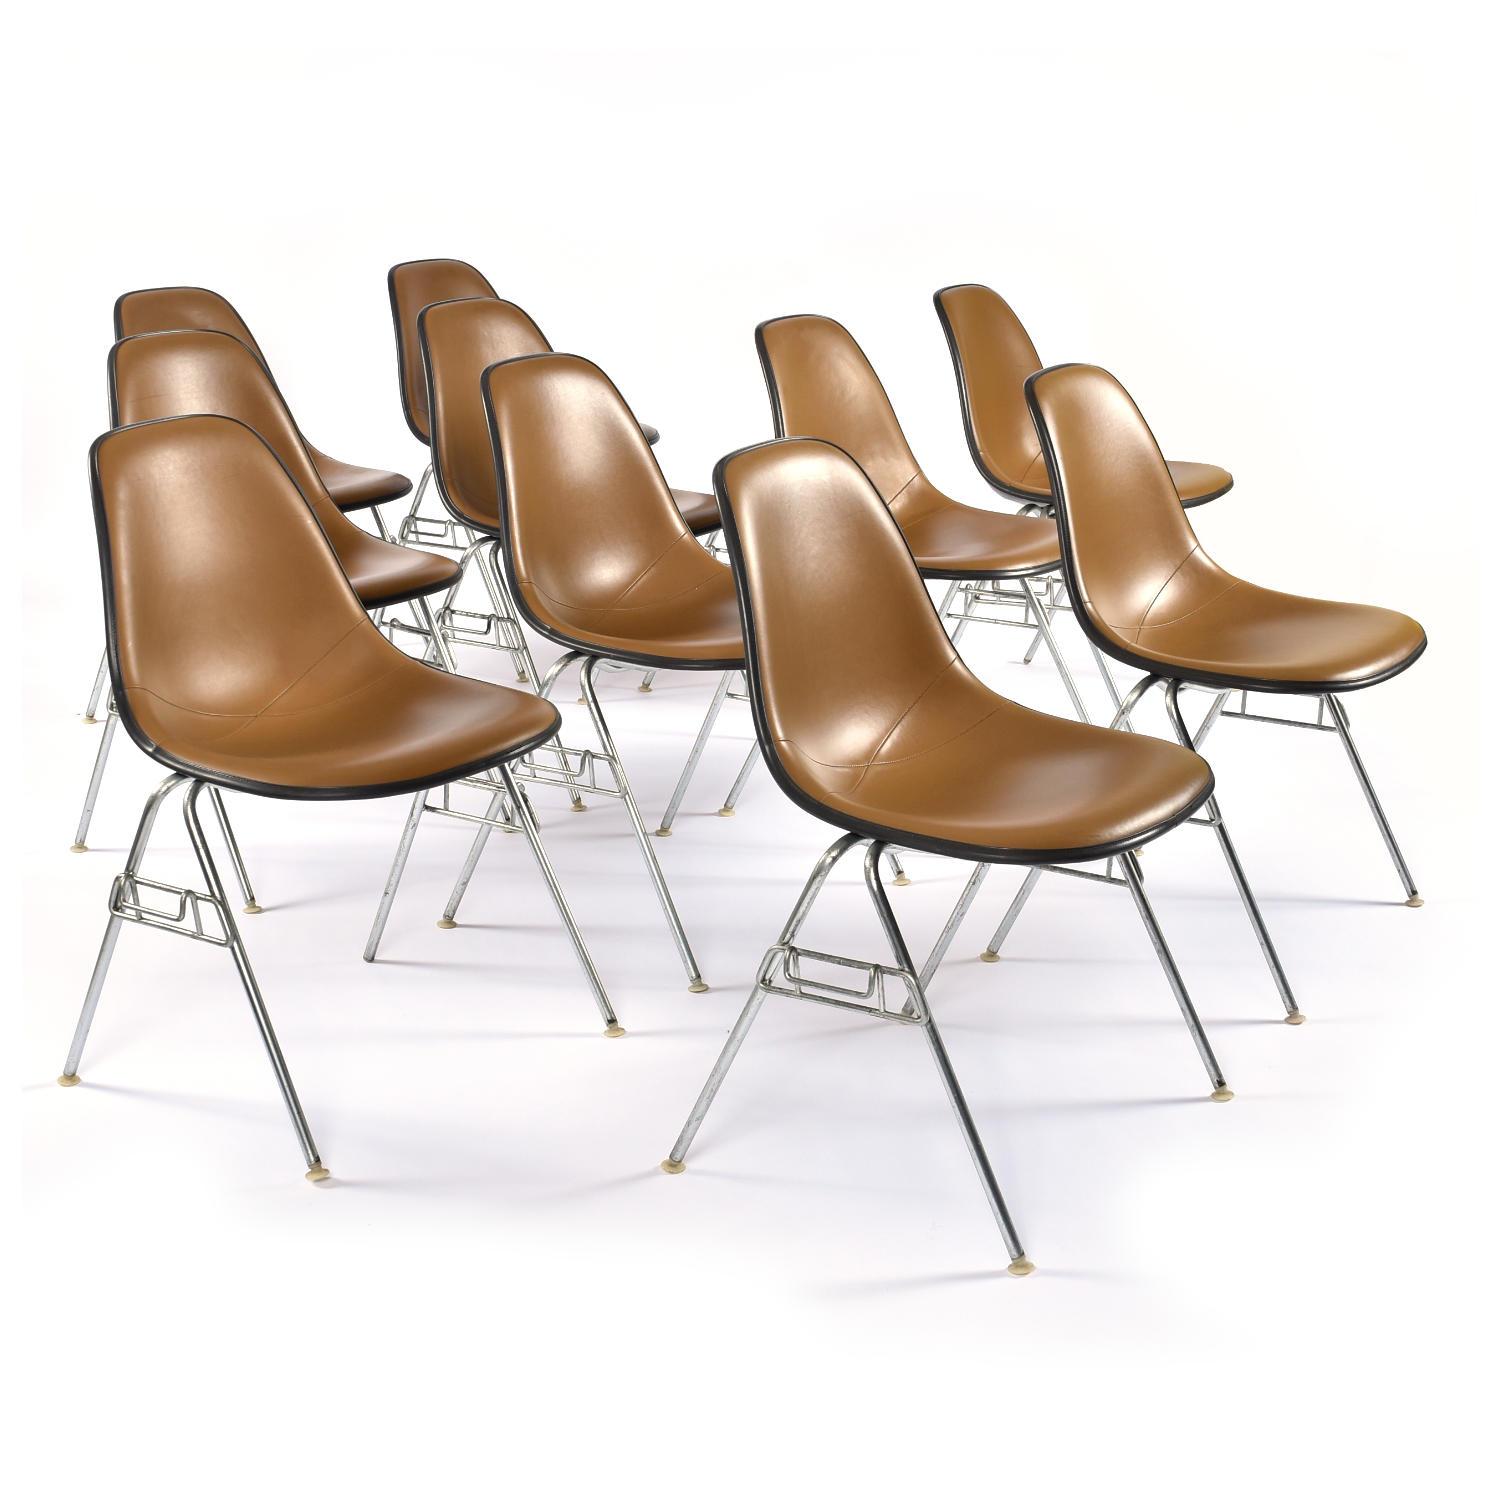 Mid-Century Modern Lot de 10 chaises empilables Eames for Herman Miller Brown Naugahyde DSS Shell Chairs en vente